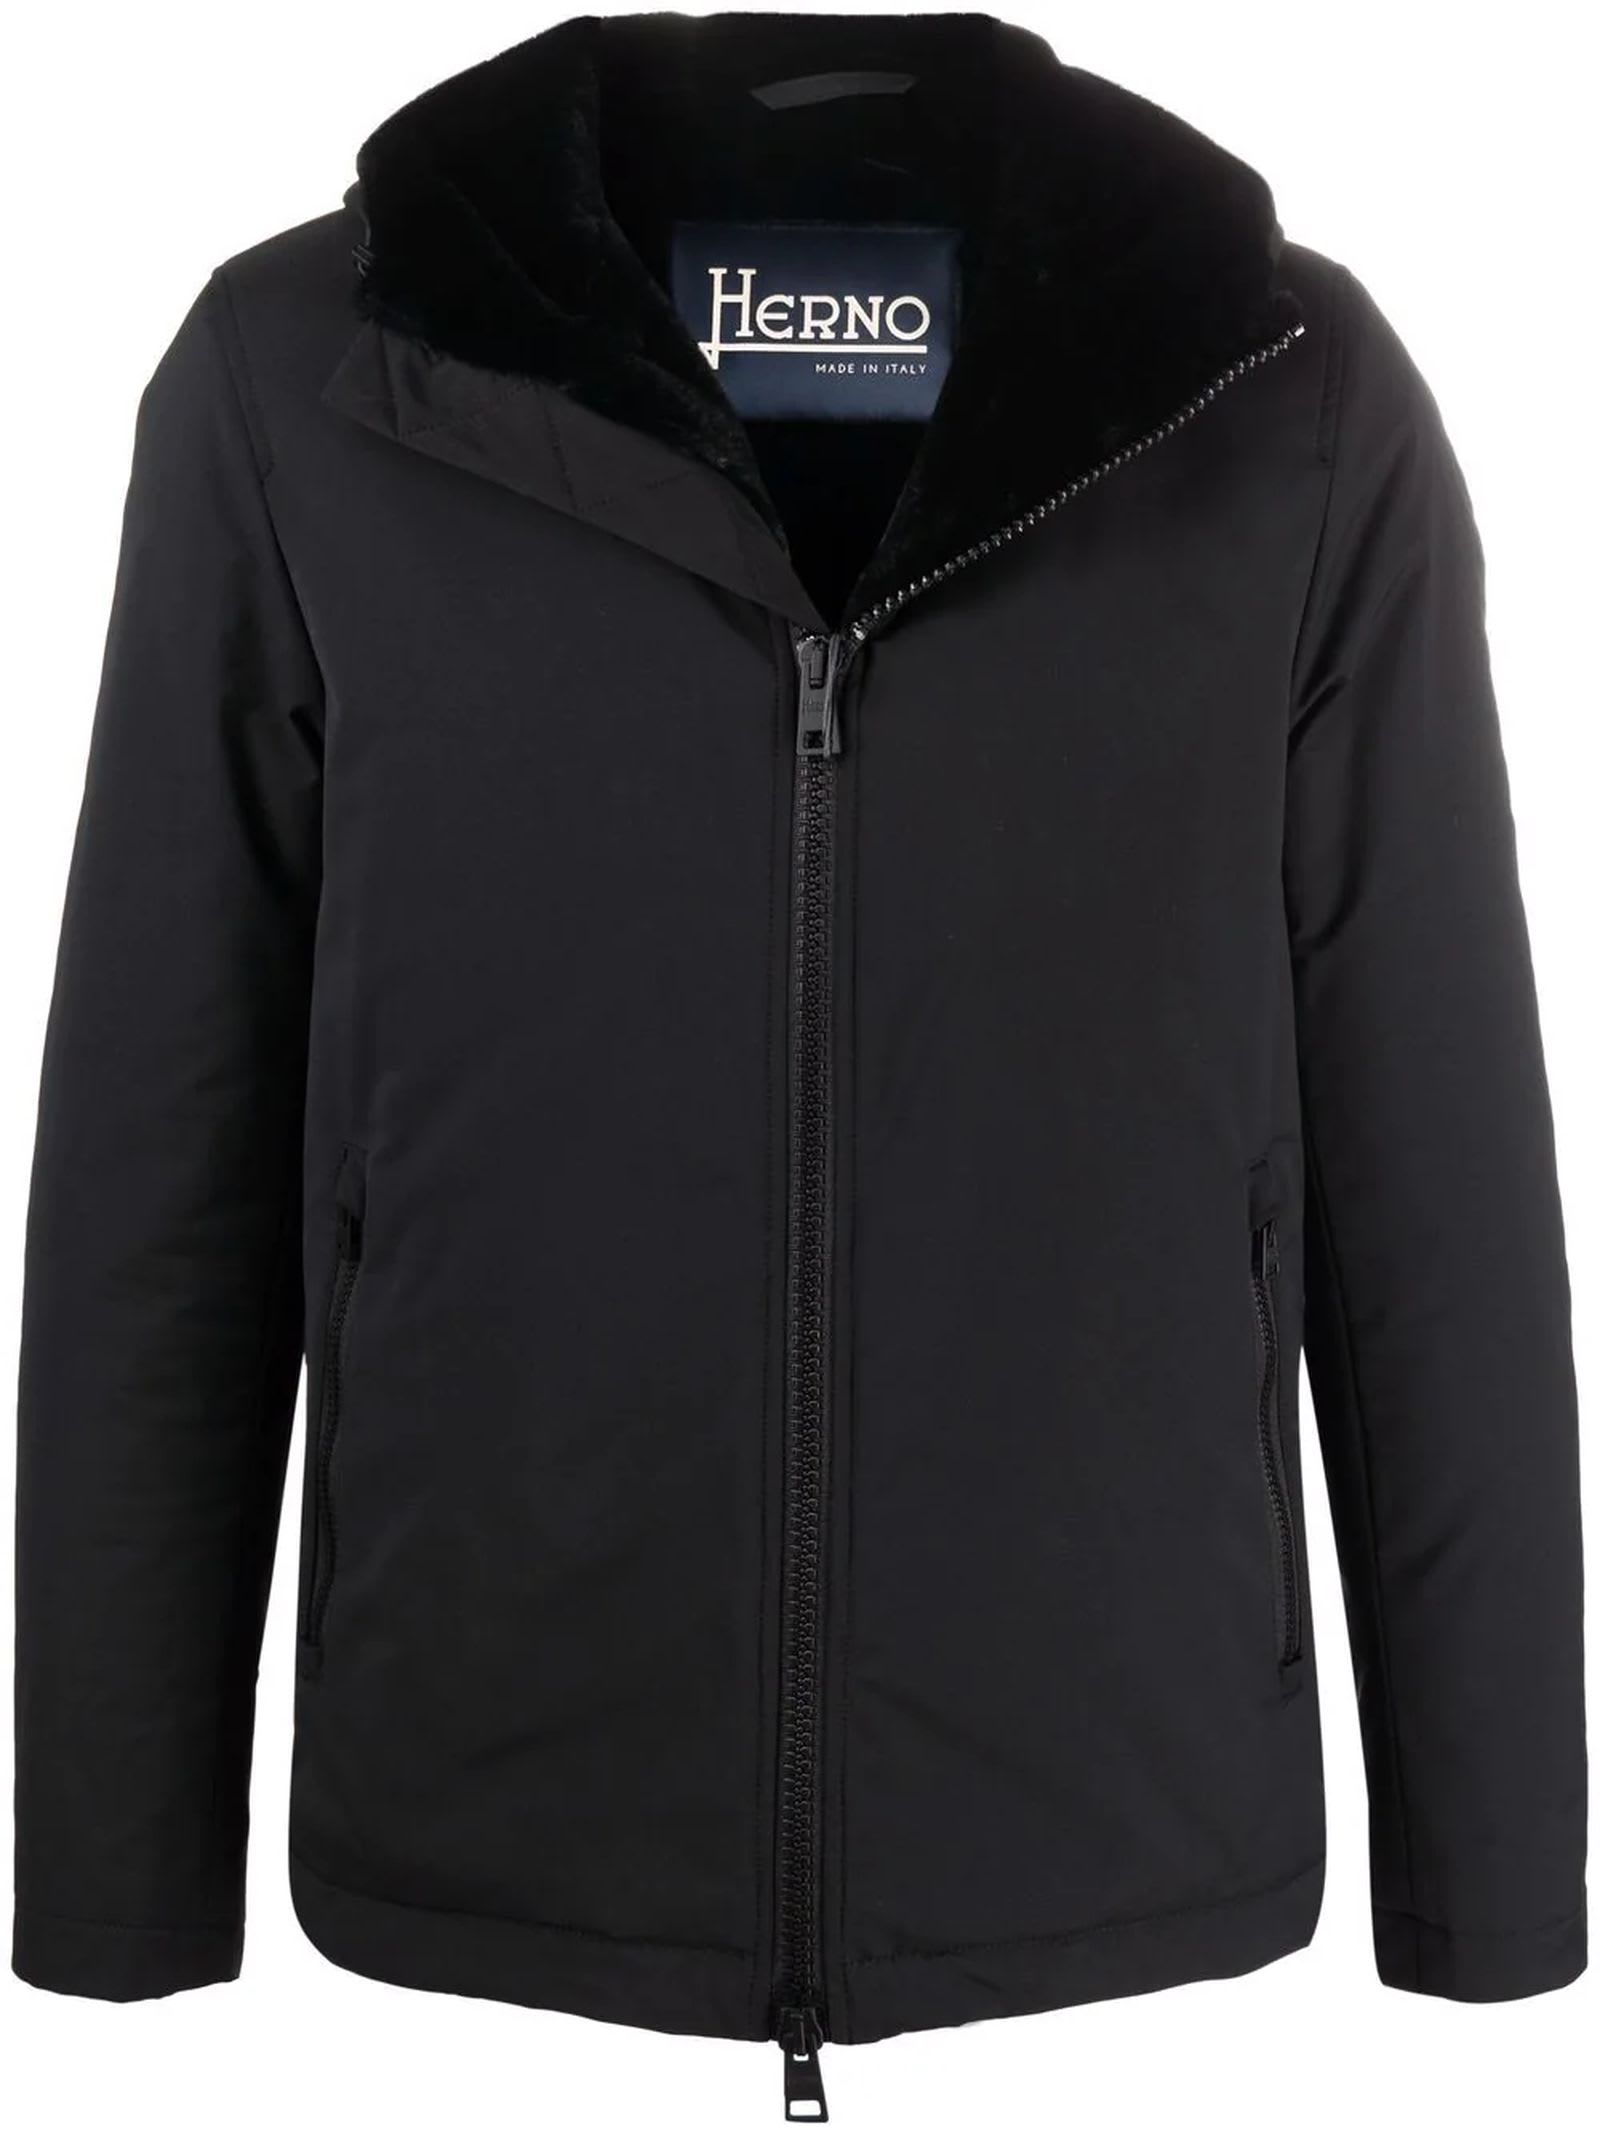 Herno Navy Blue Hooded Jacket